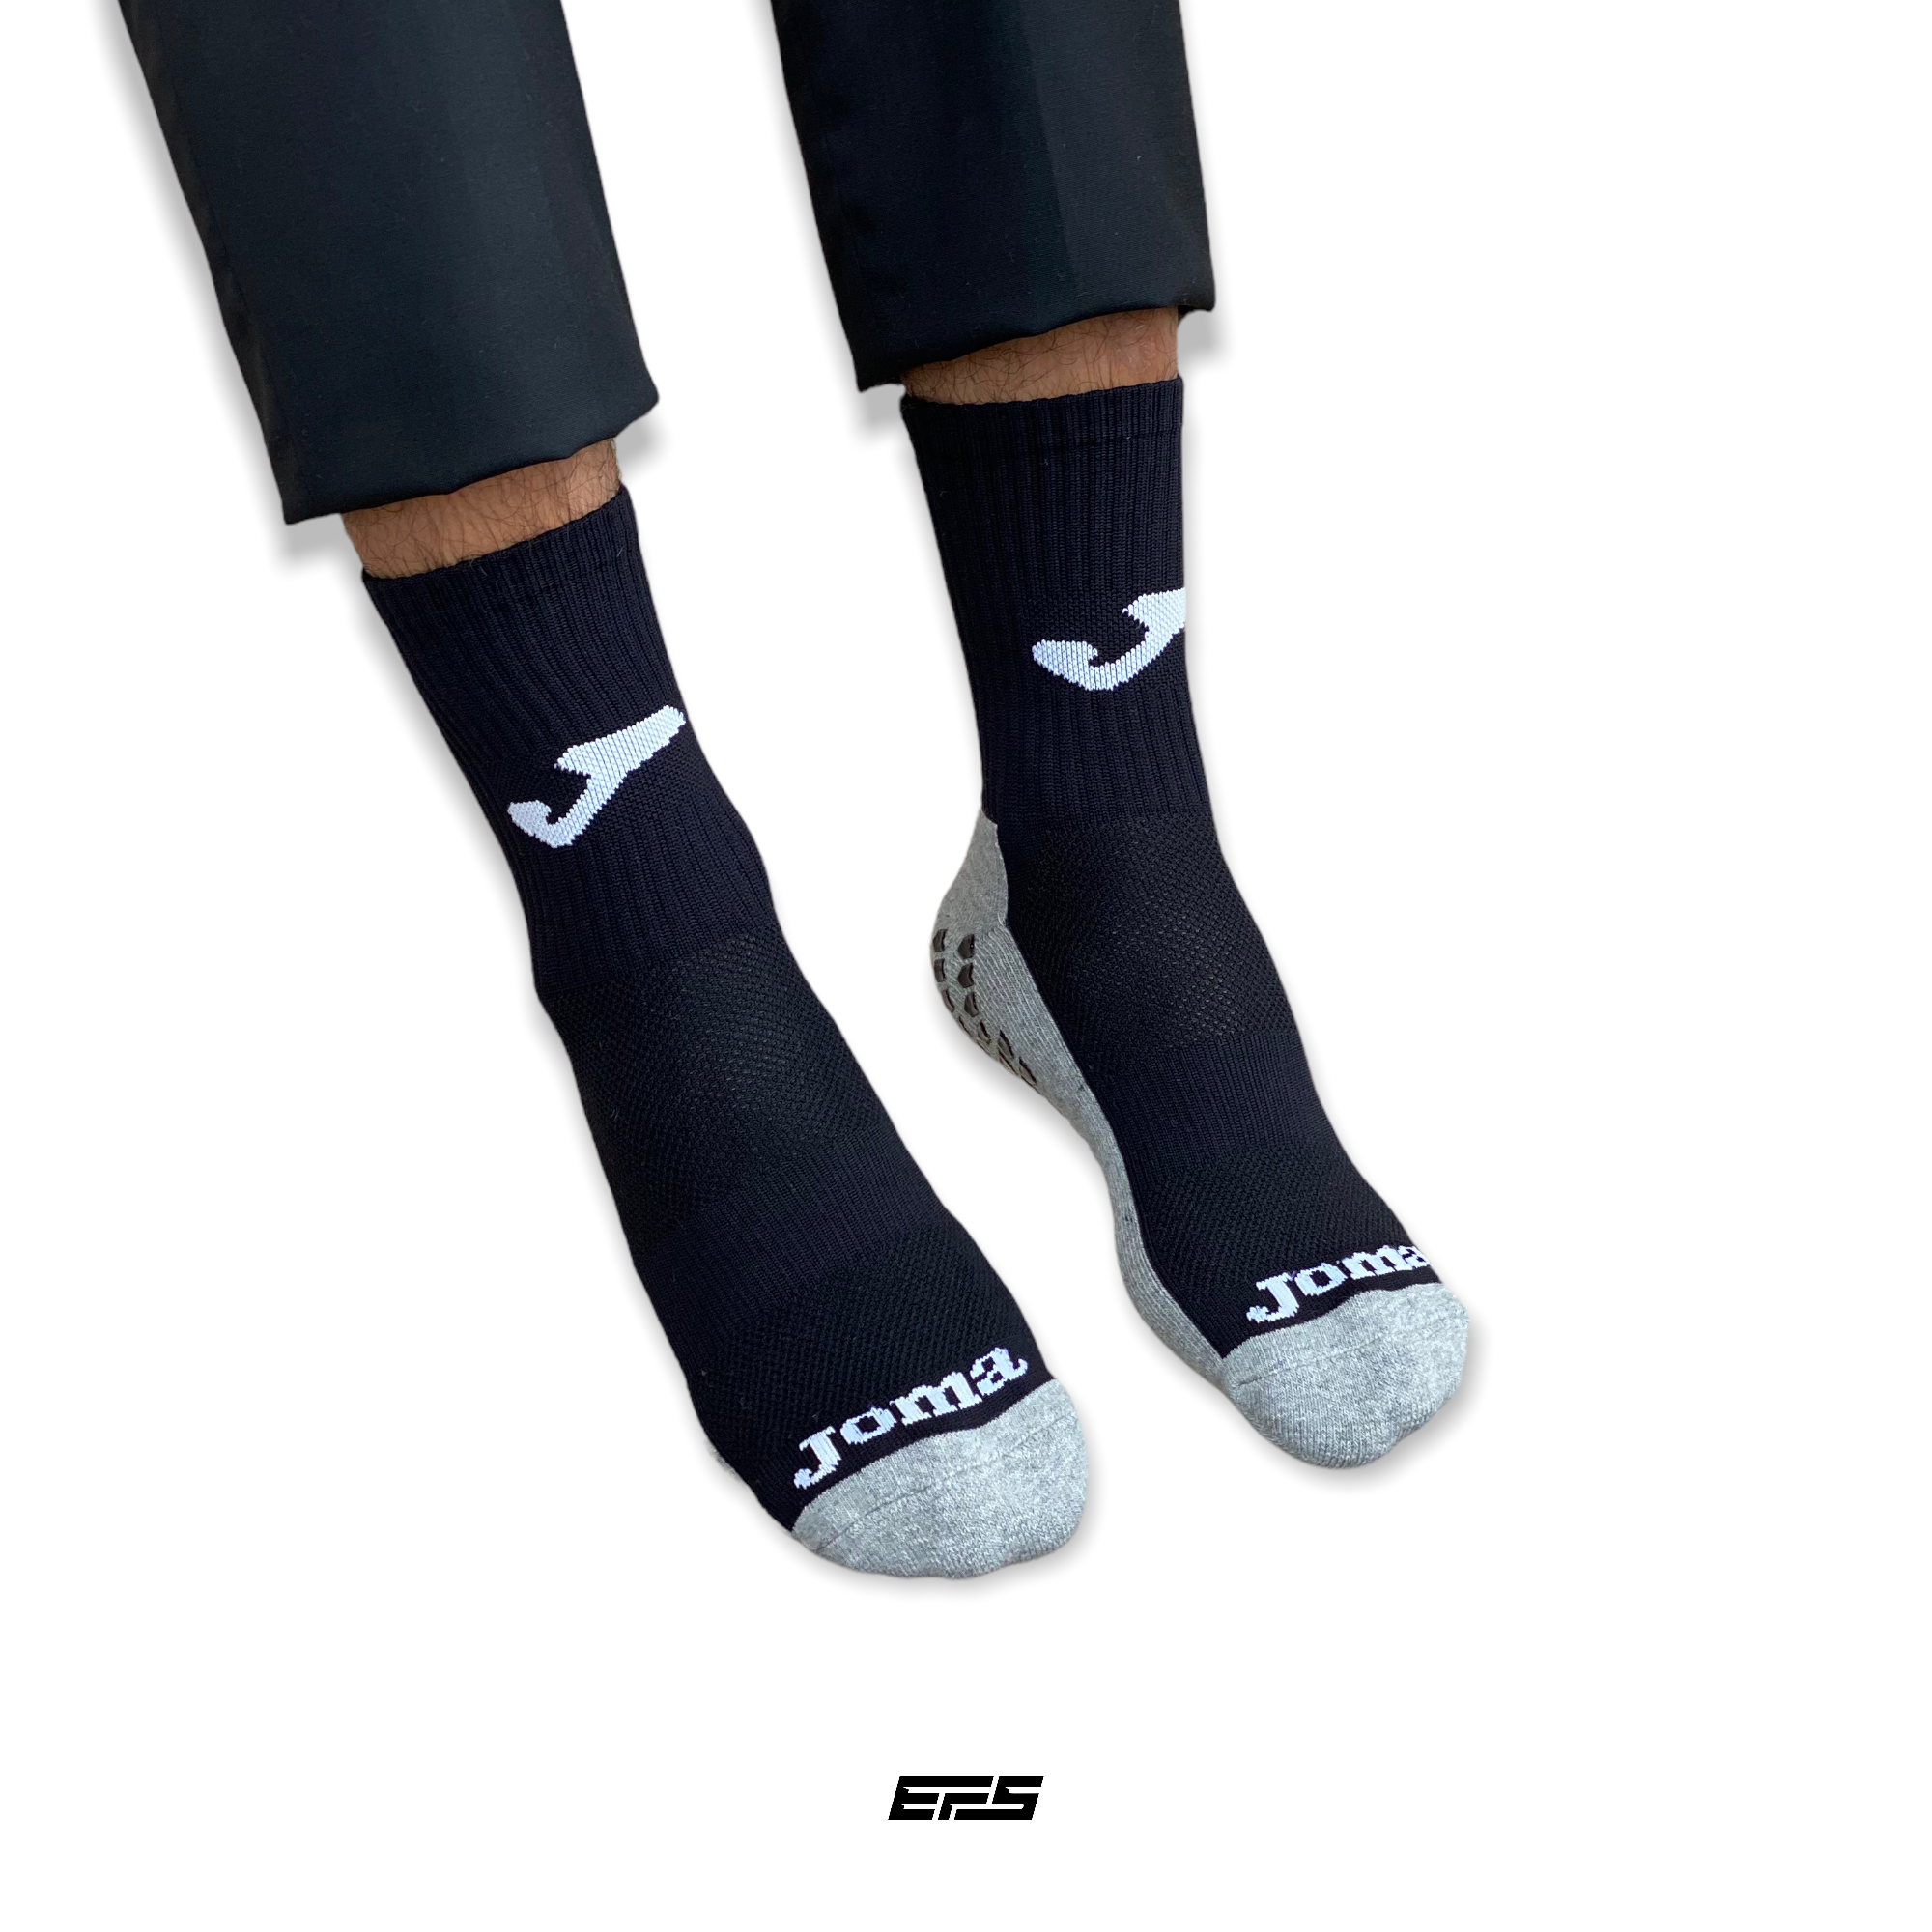 Joma Sport Sock Anti Slip - Extravaganza Futsal Shop